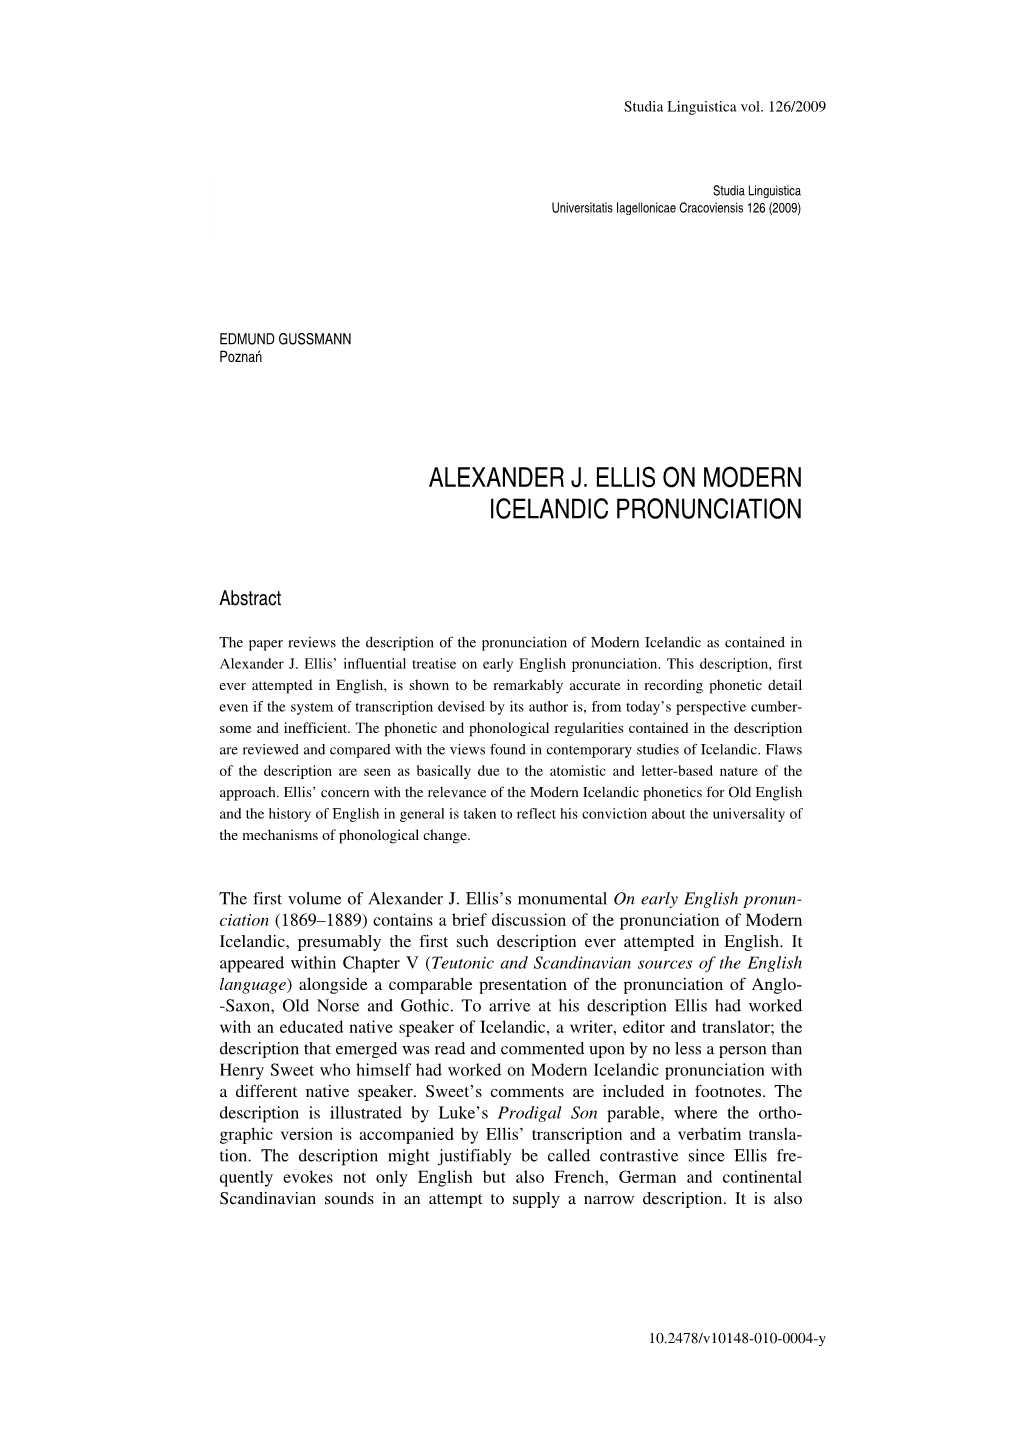 Alexander J. Ellis on Modern Icelandic Pronunciation